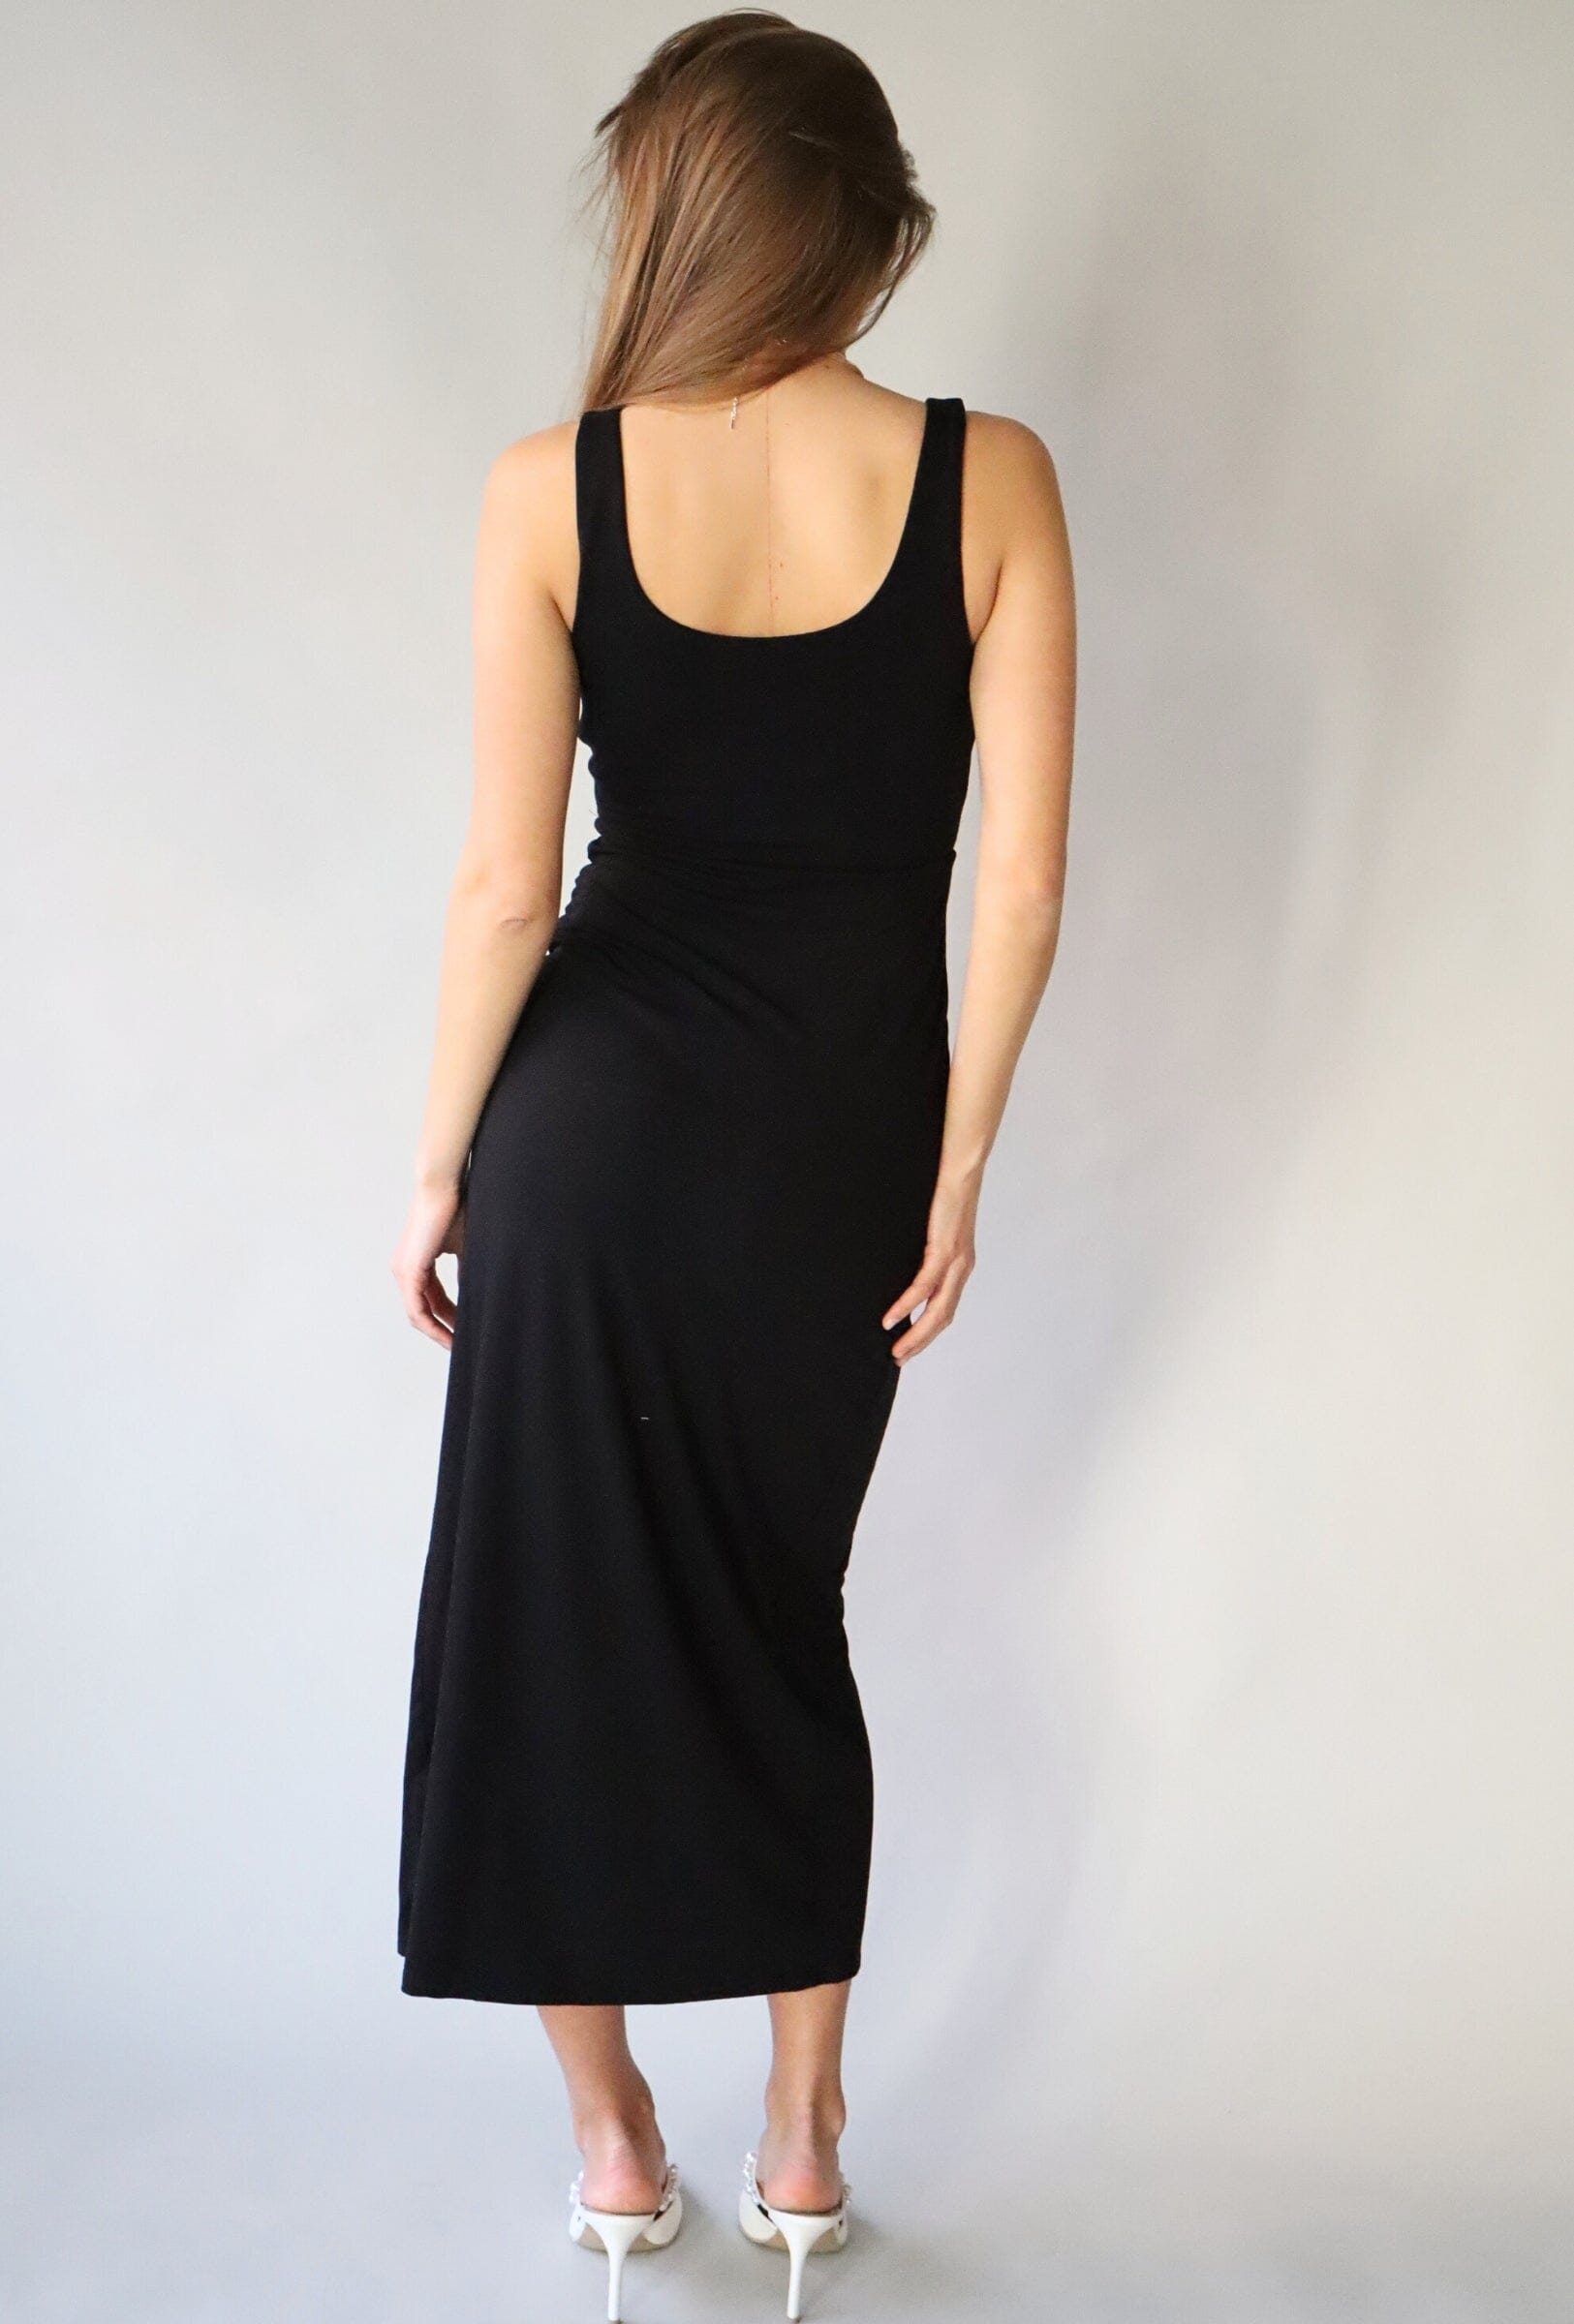 MELBOURNE BLACK DRESS Dress z supply 